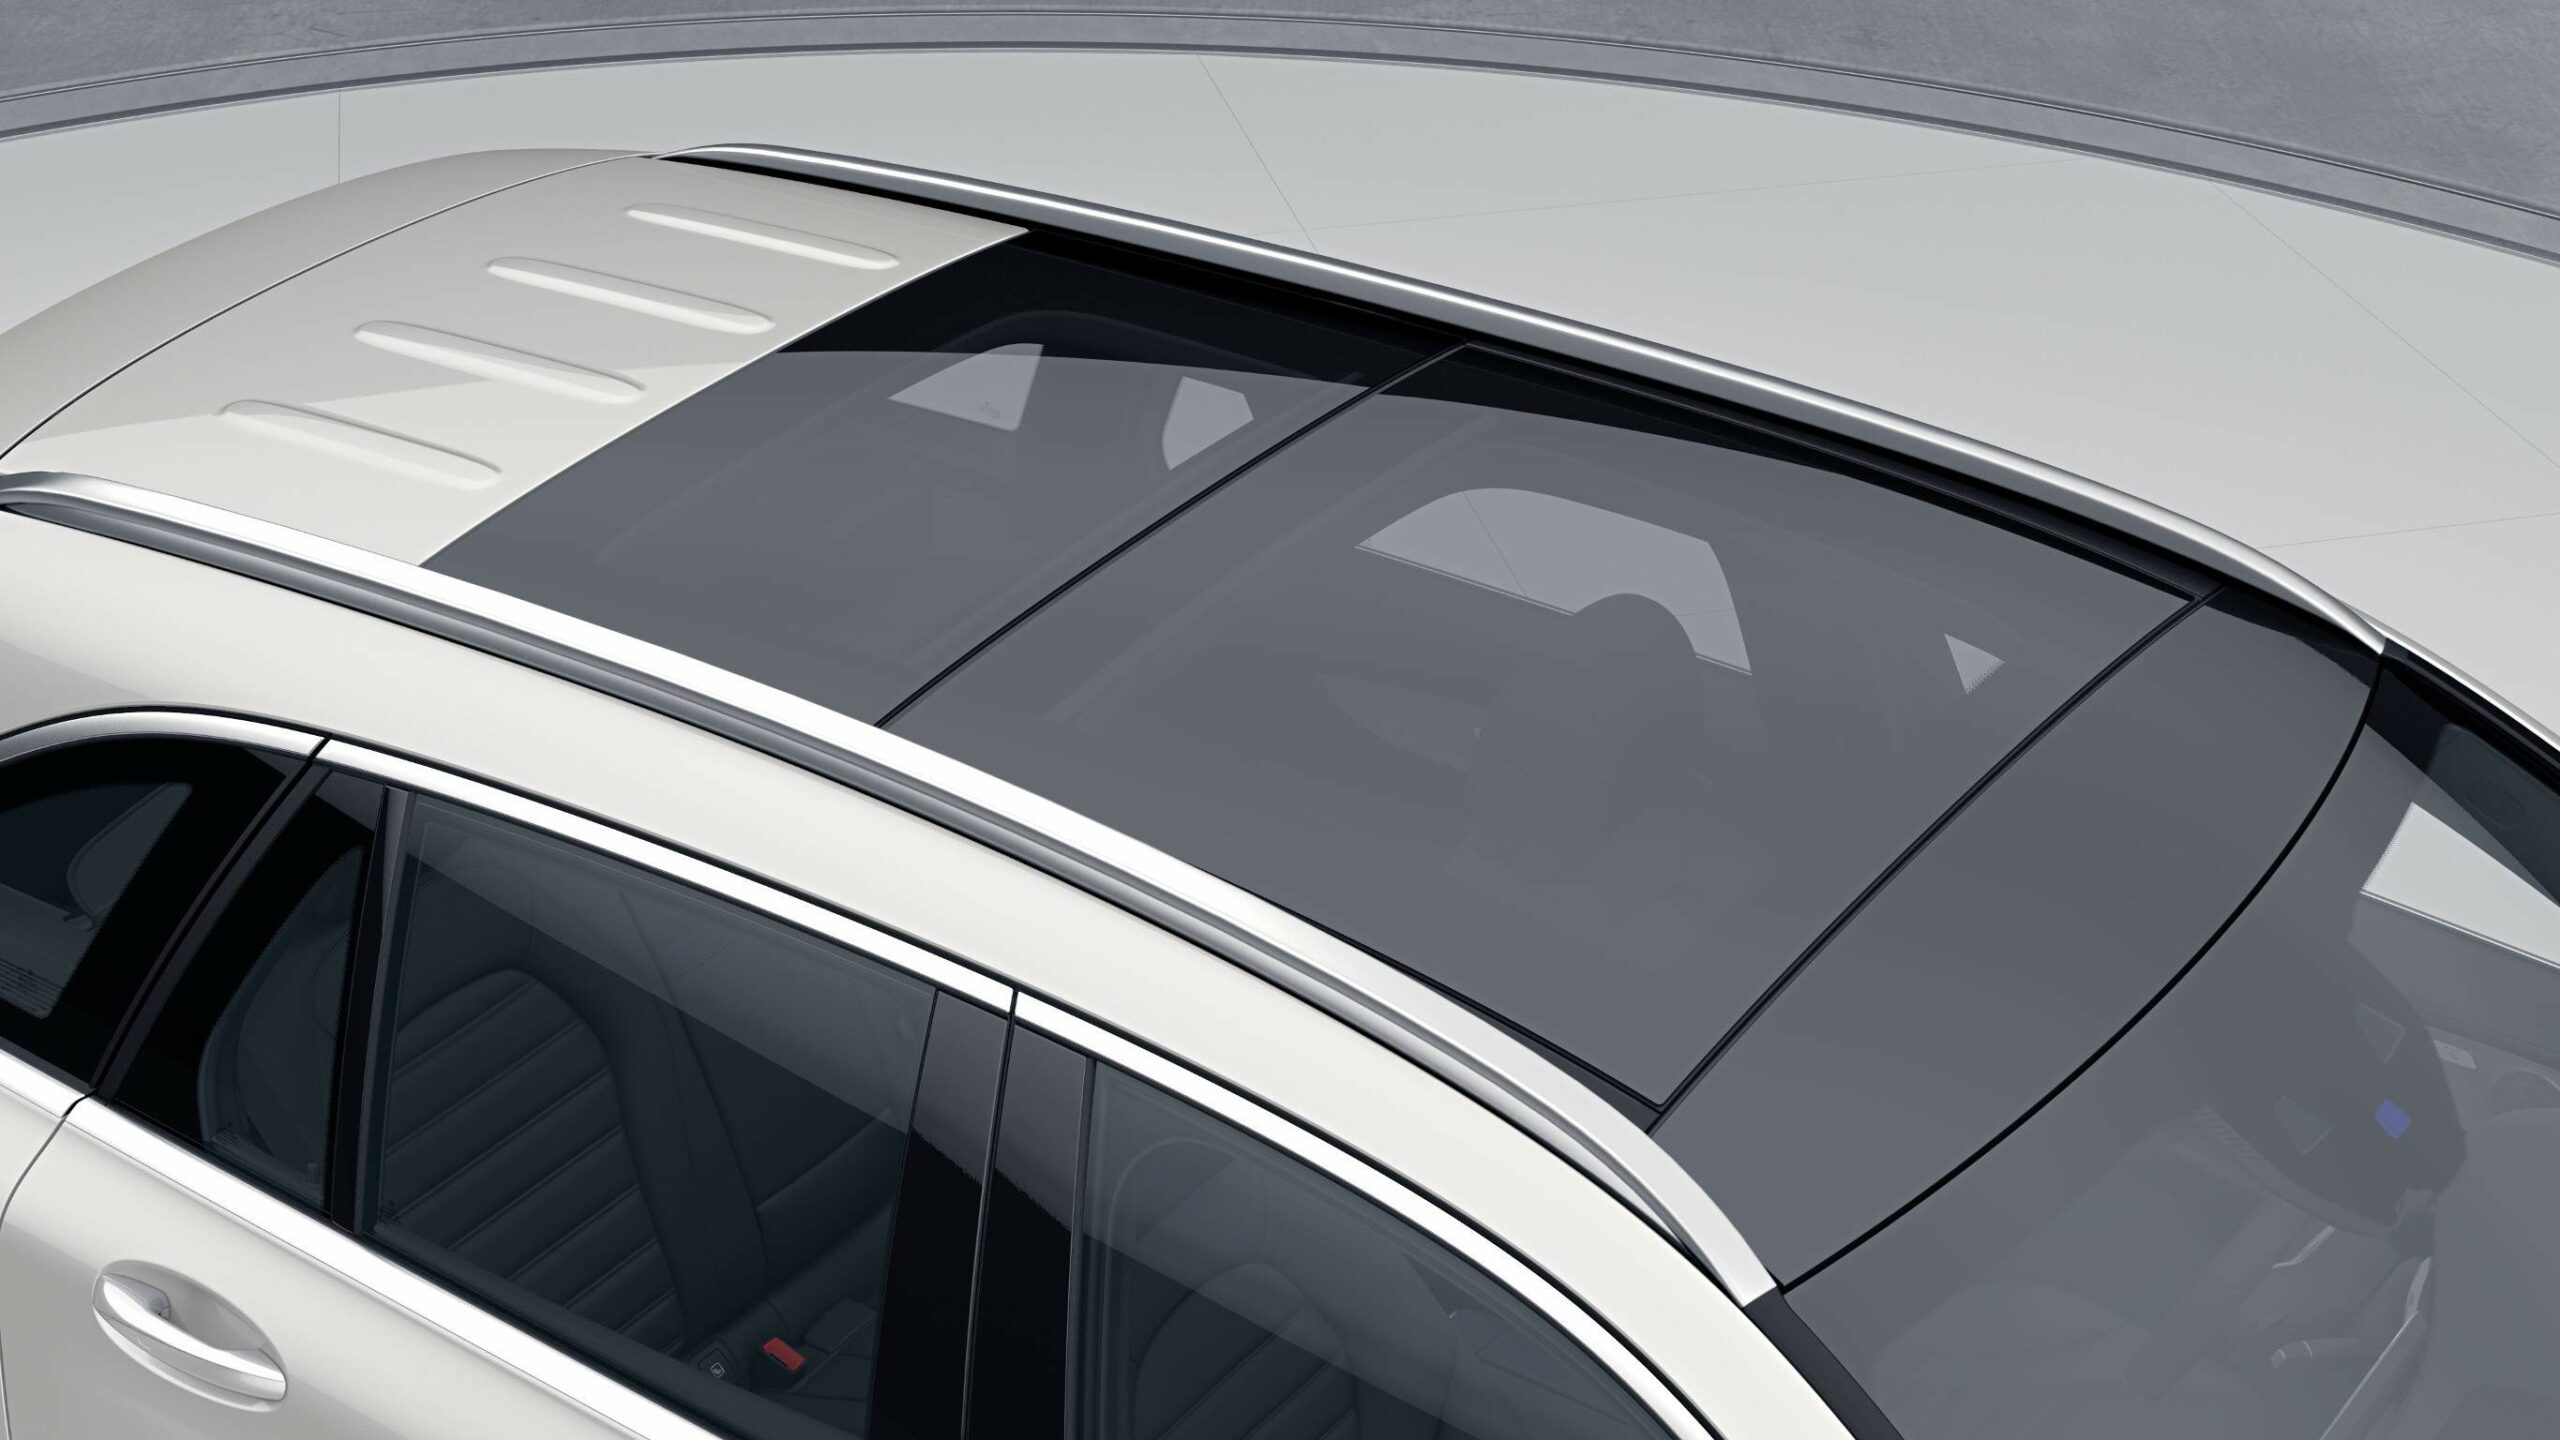 Techo panoramico corredizo de la GLC SUV de Mercedes-Benz